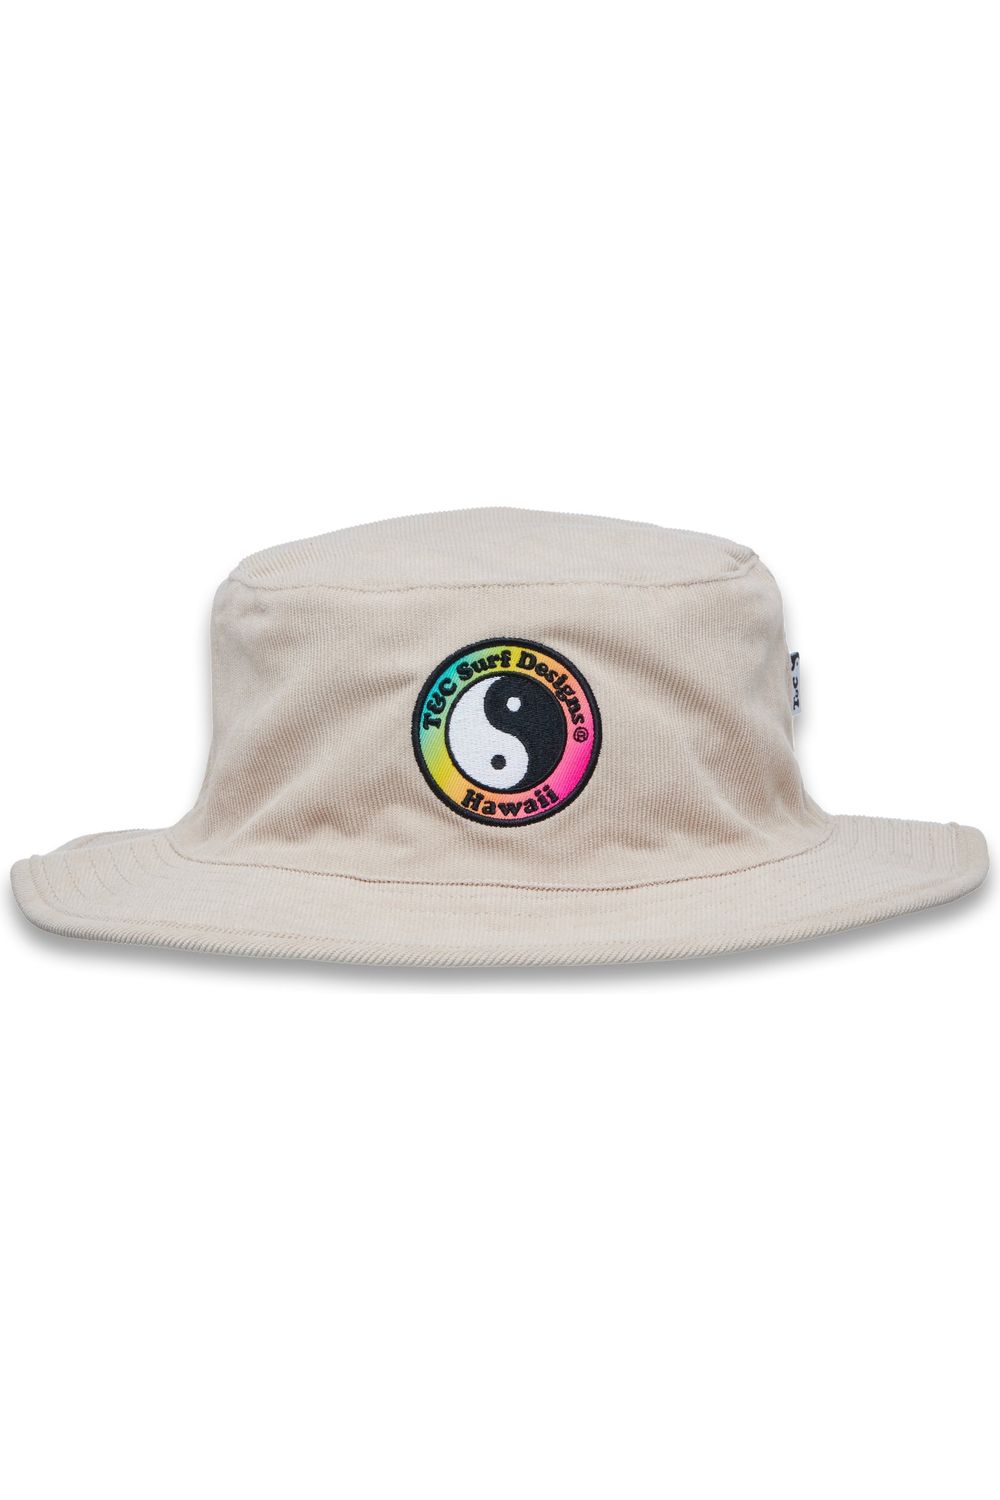 T&C Surf Designs YY Bucket Hat Stone